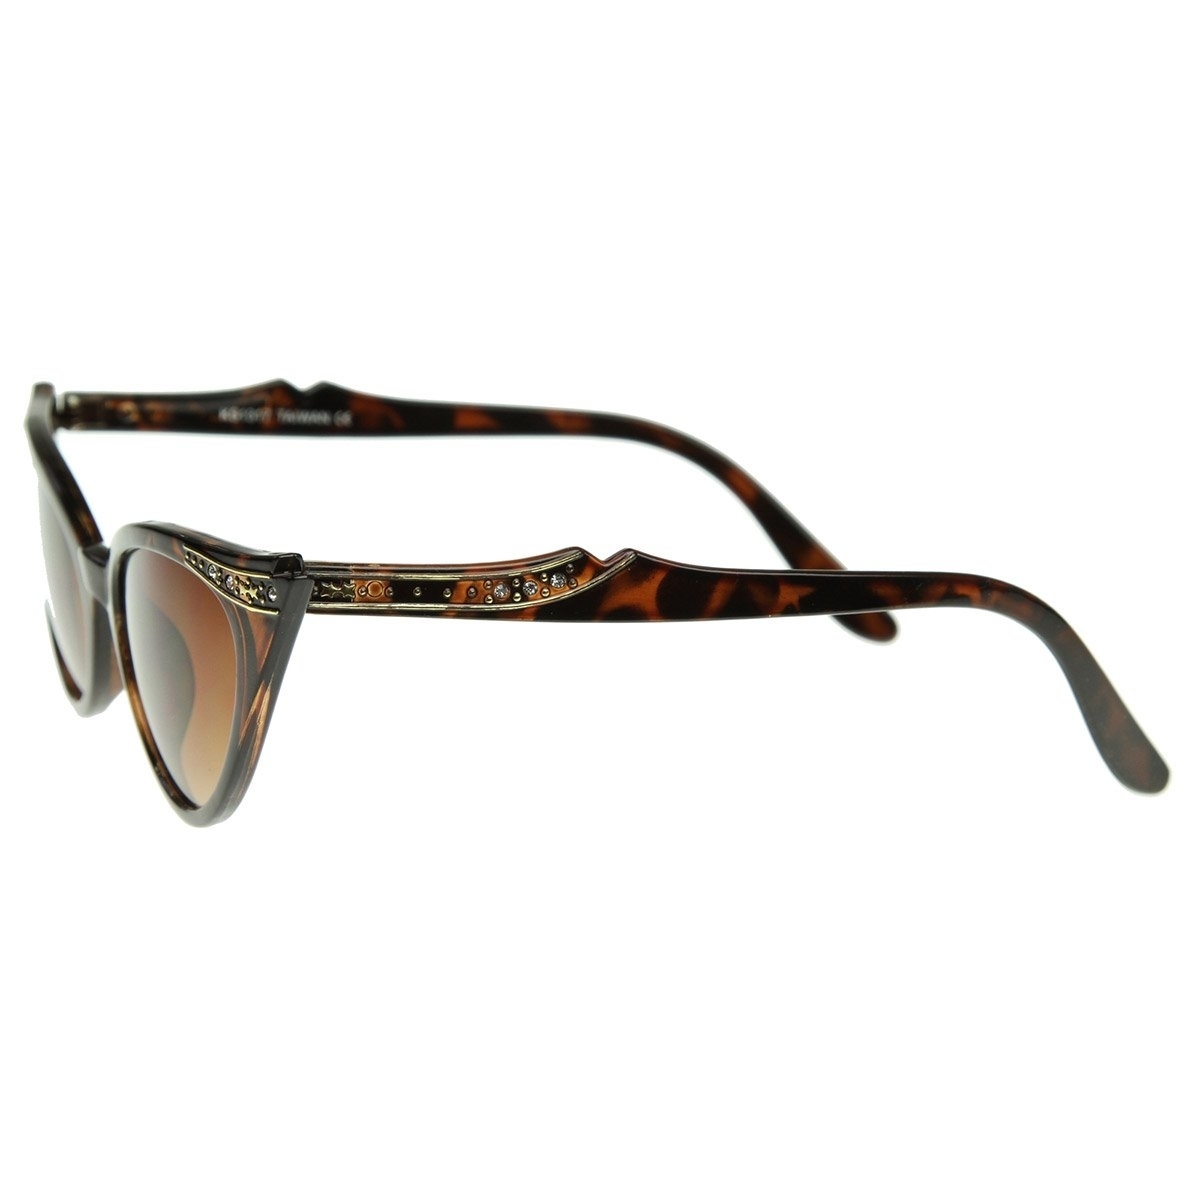 Vintage Inspired Mod Womens Fashion Rhinestone Cat Eye Sunglasses - Brown-Fade